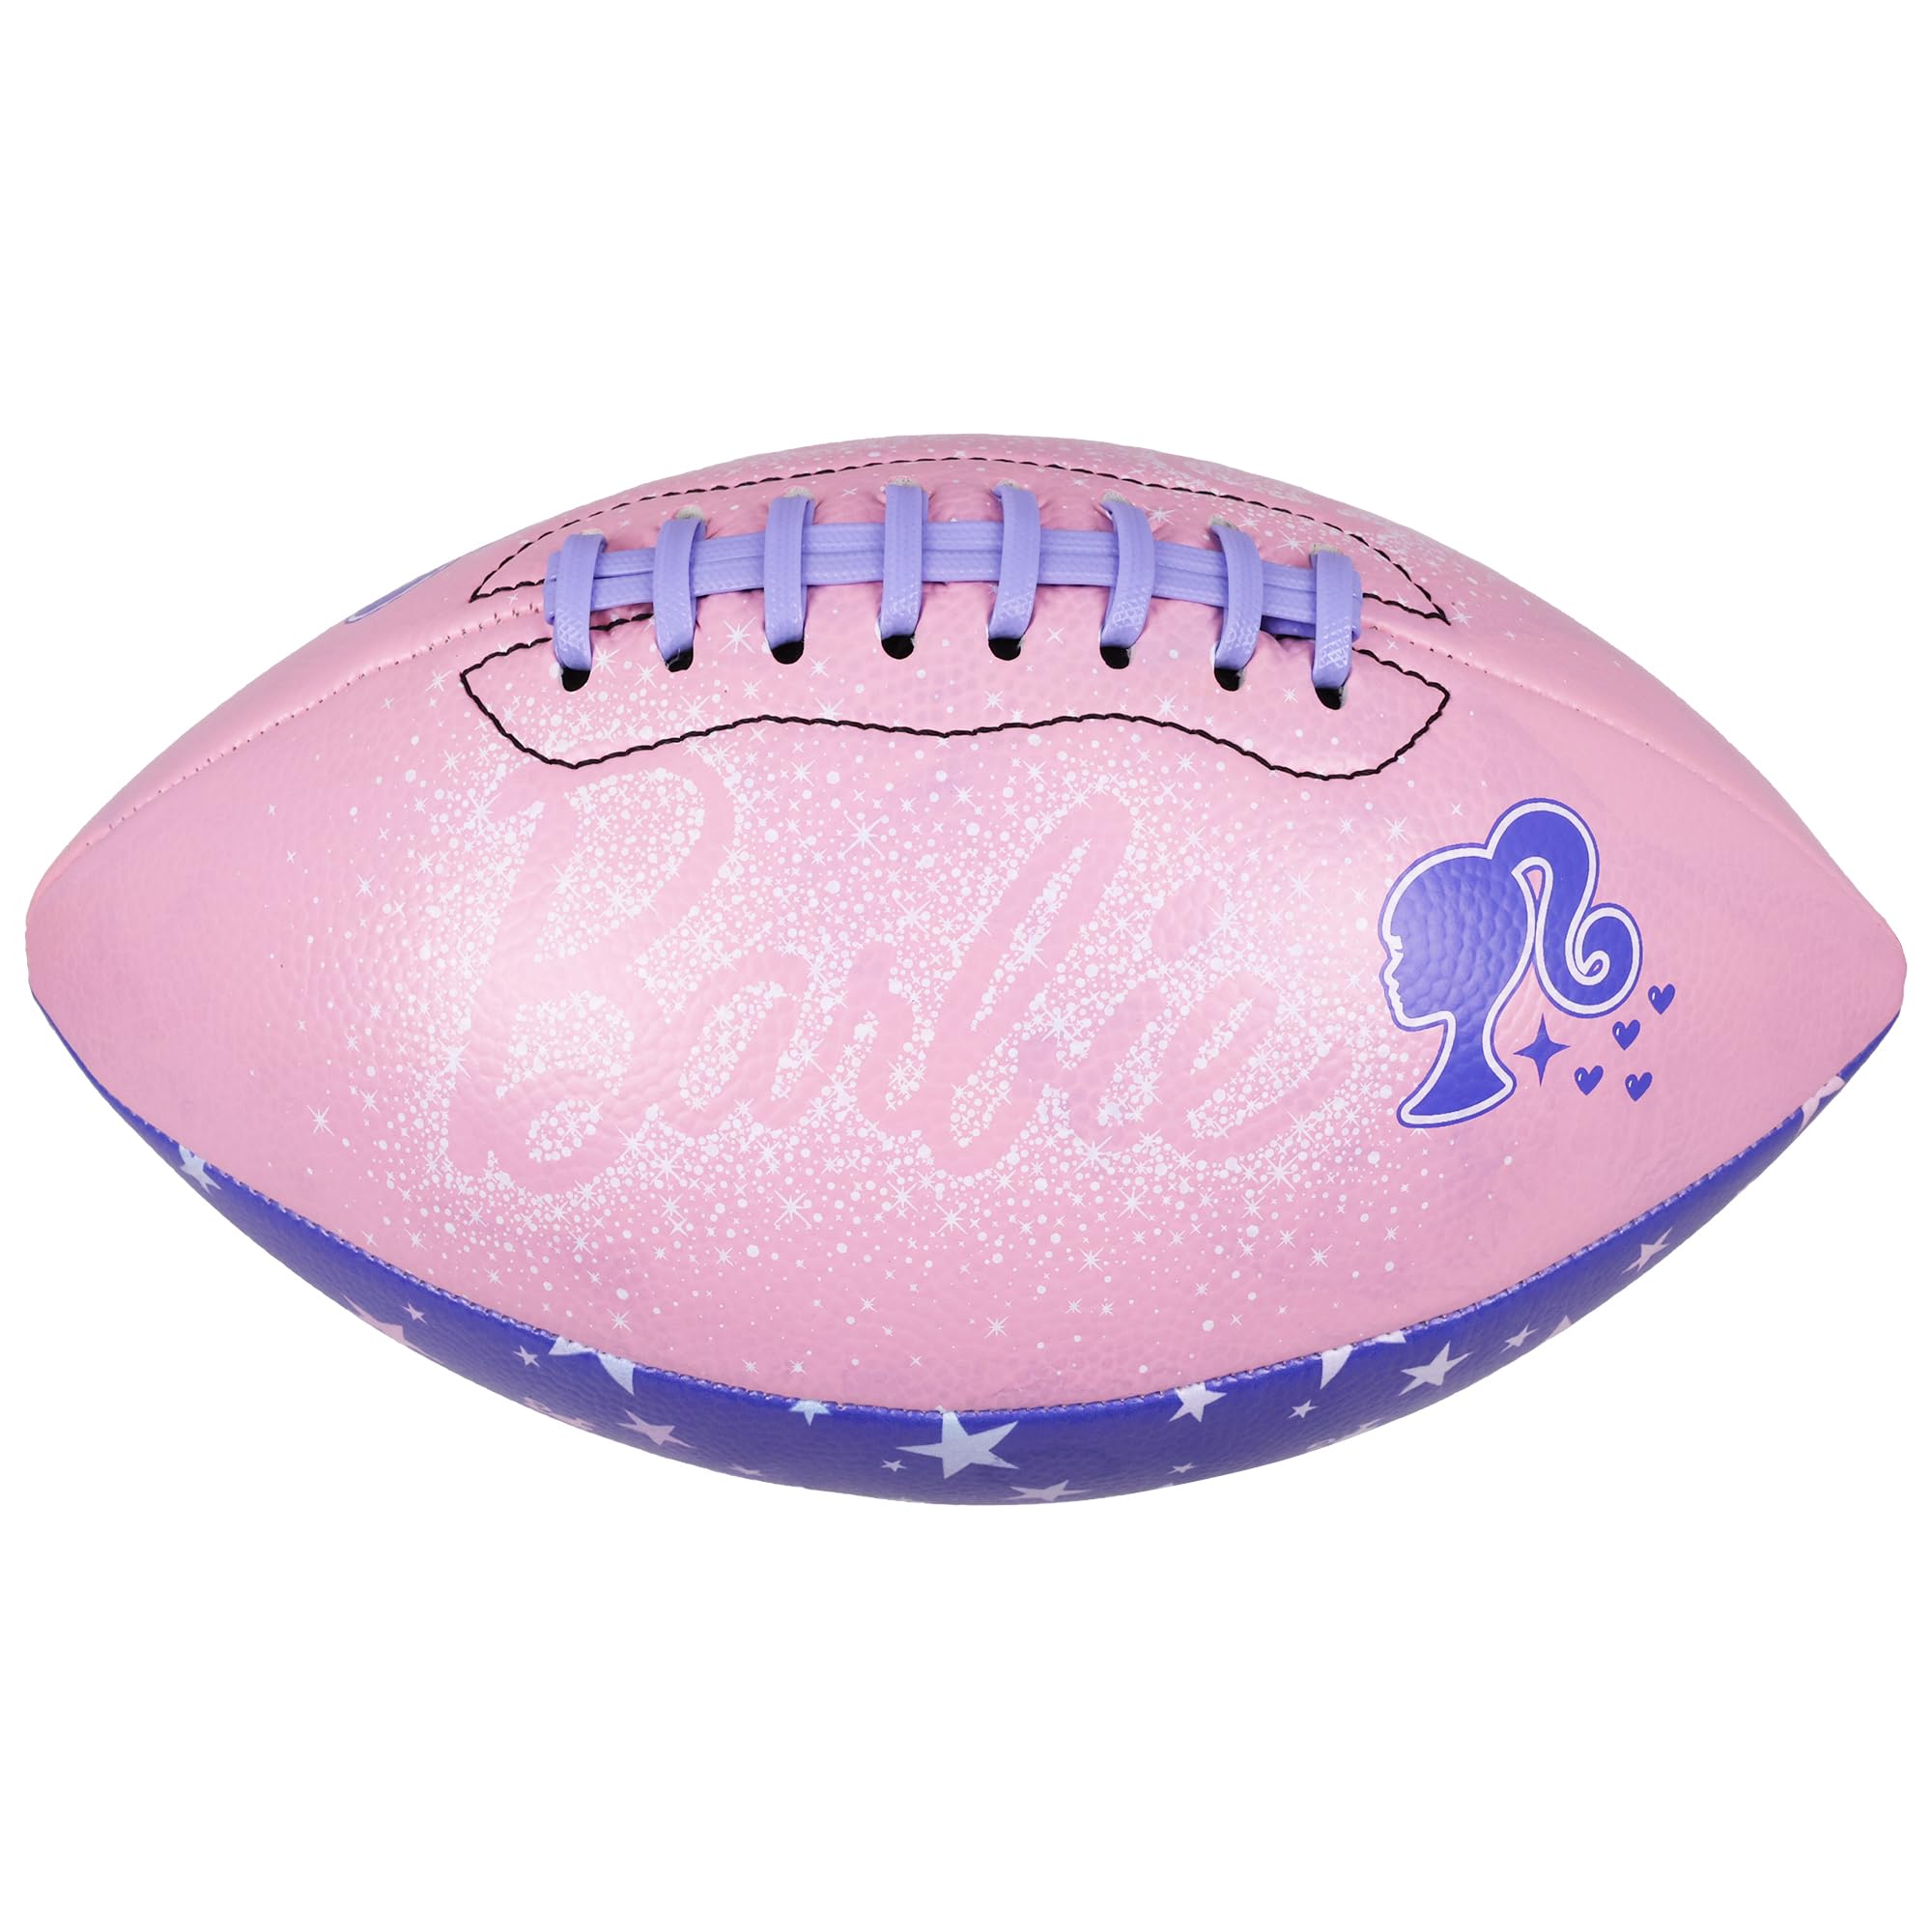 Capelli Sport Barbie Youth Football, Sparkle Barbie Small Mini Junior Football for Kids, Size 6, Multi